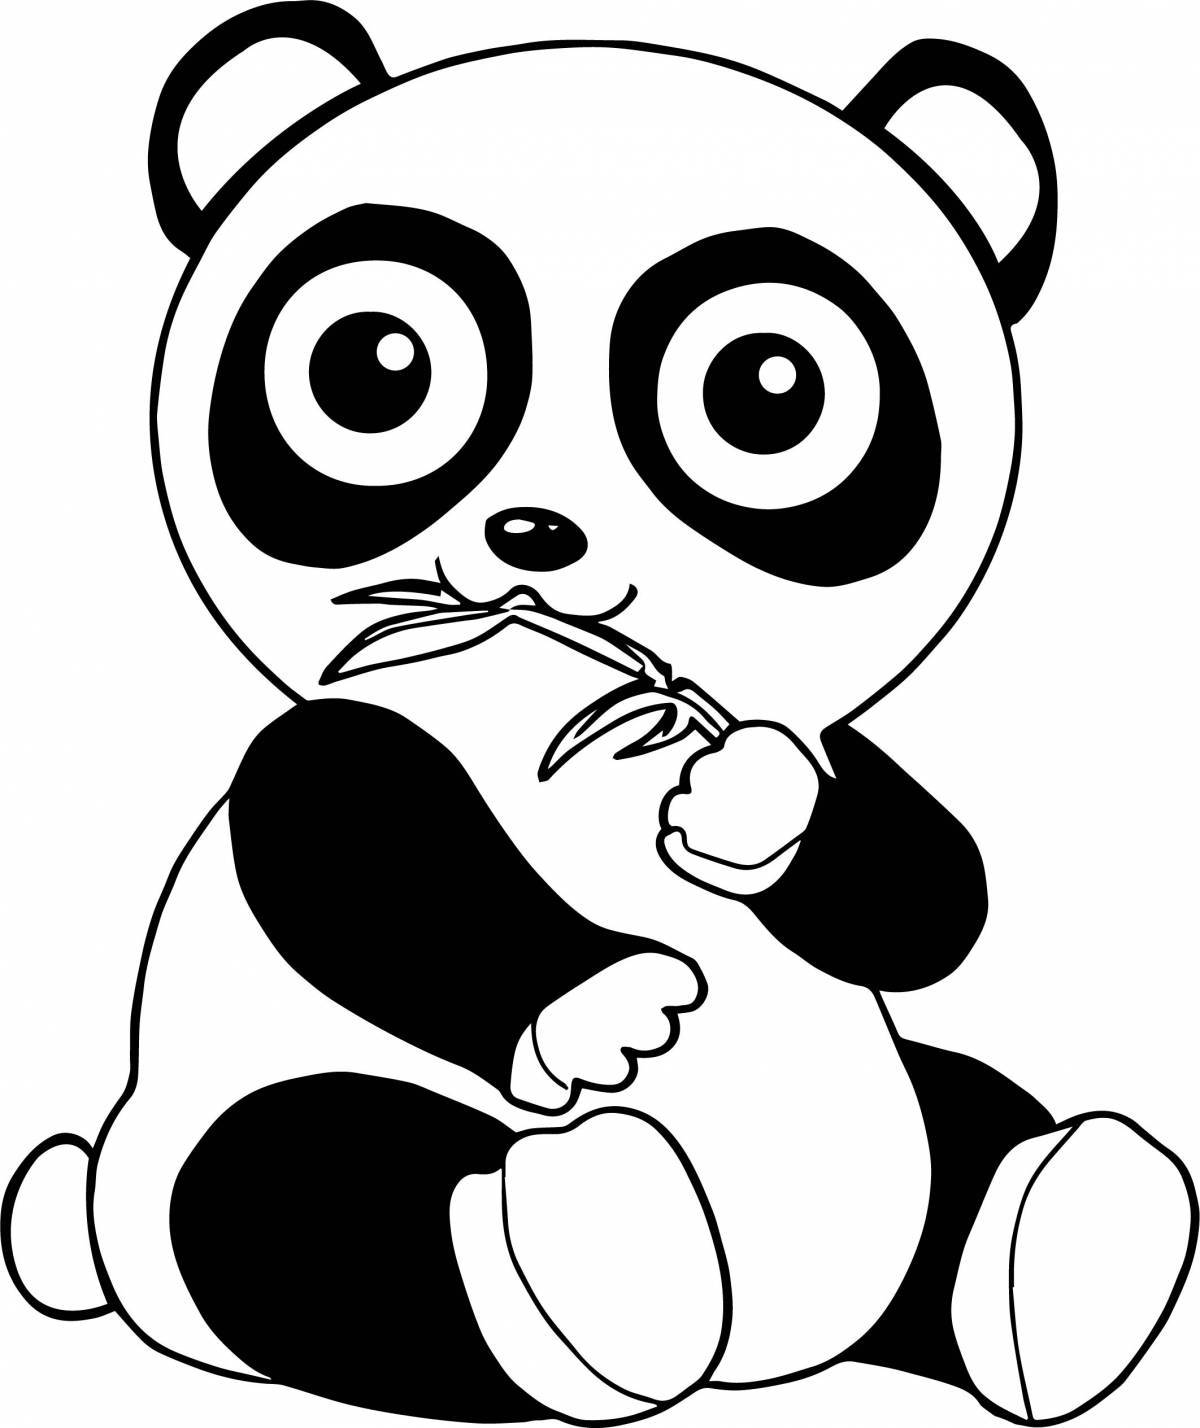 Panda coloring page content